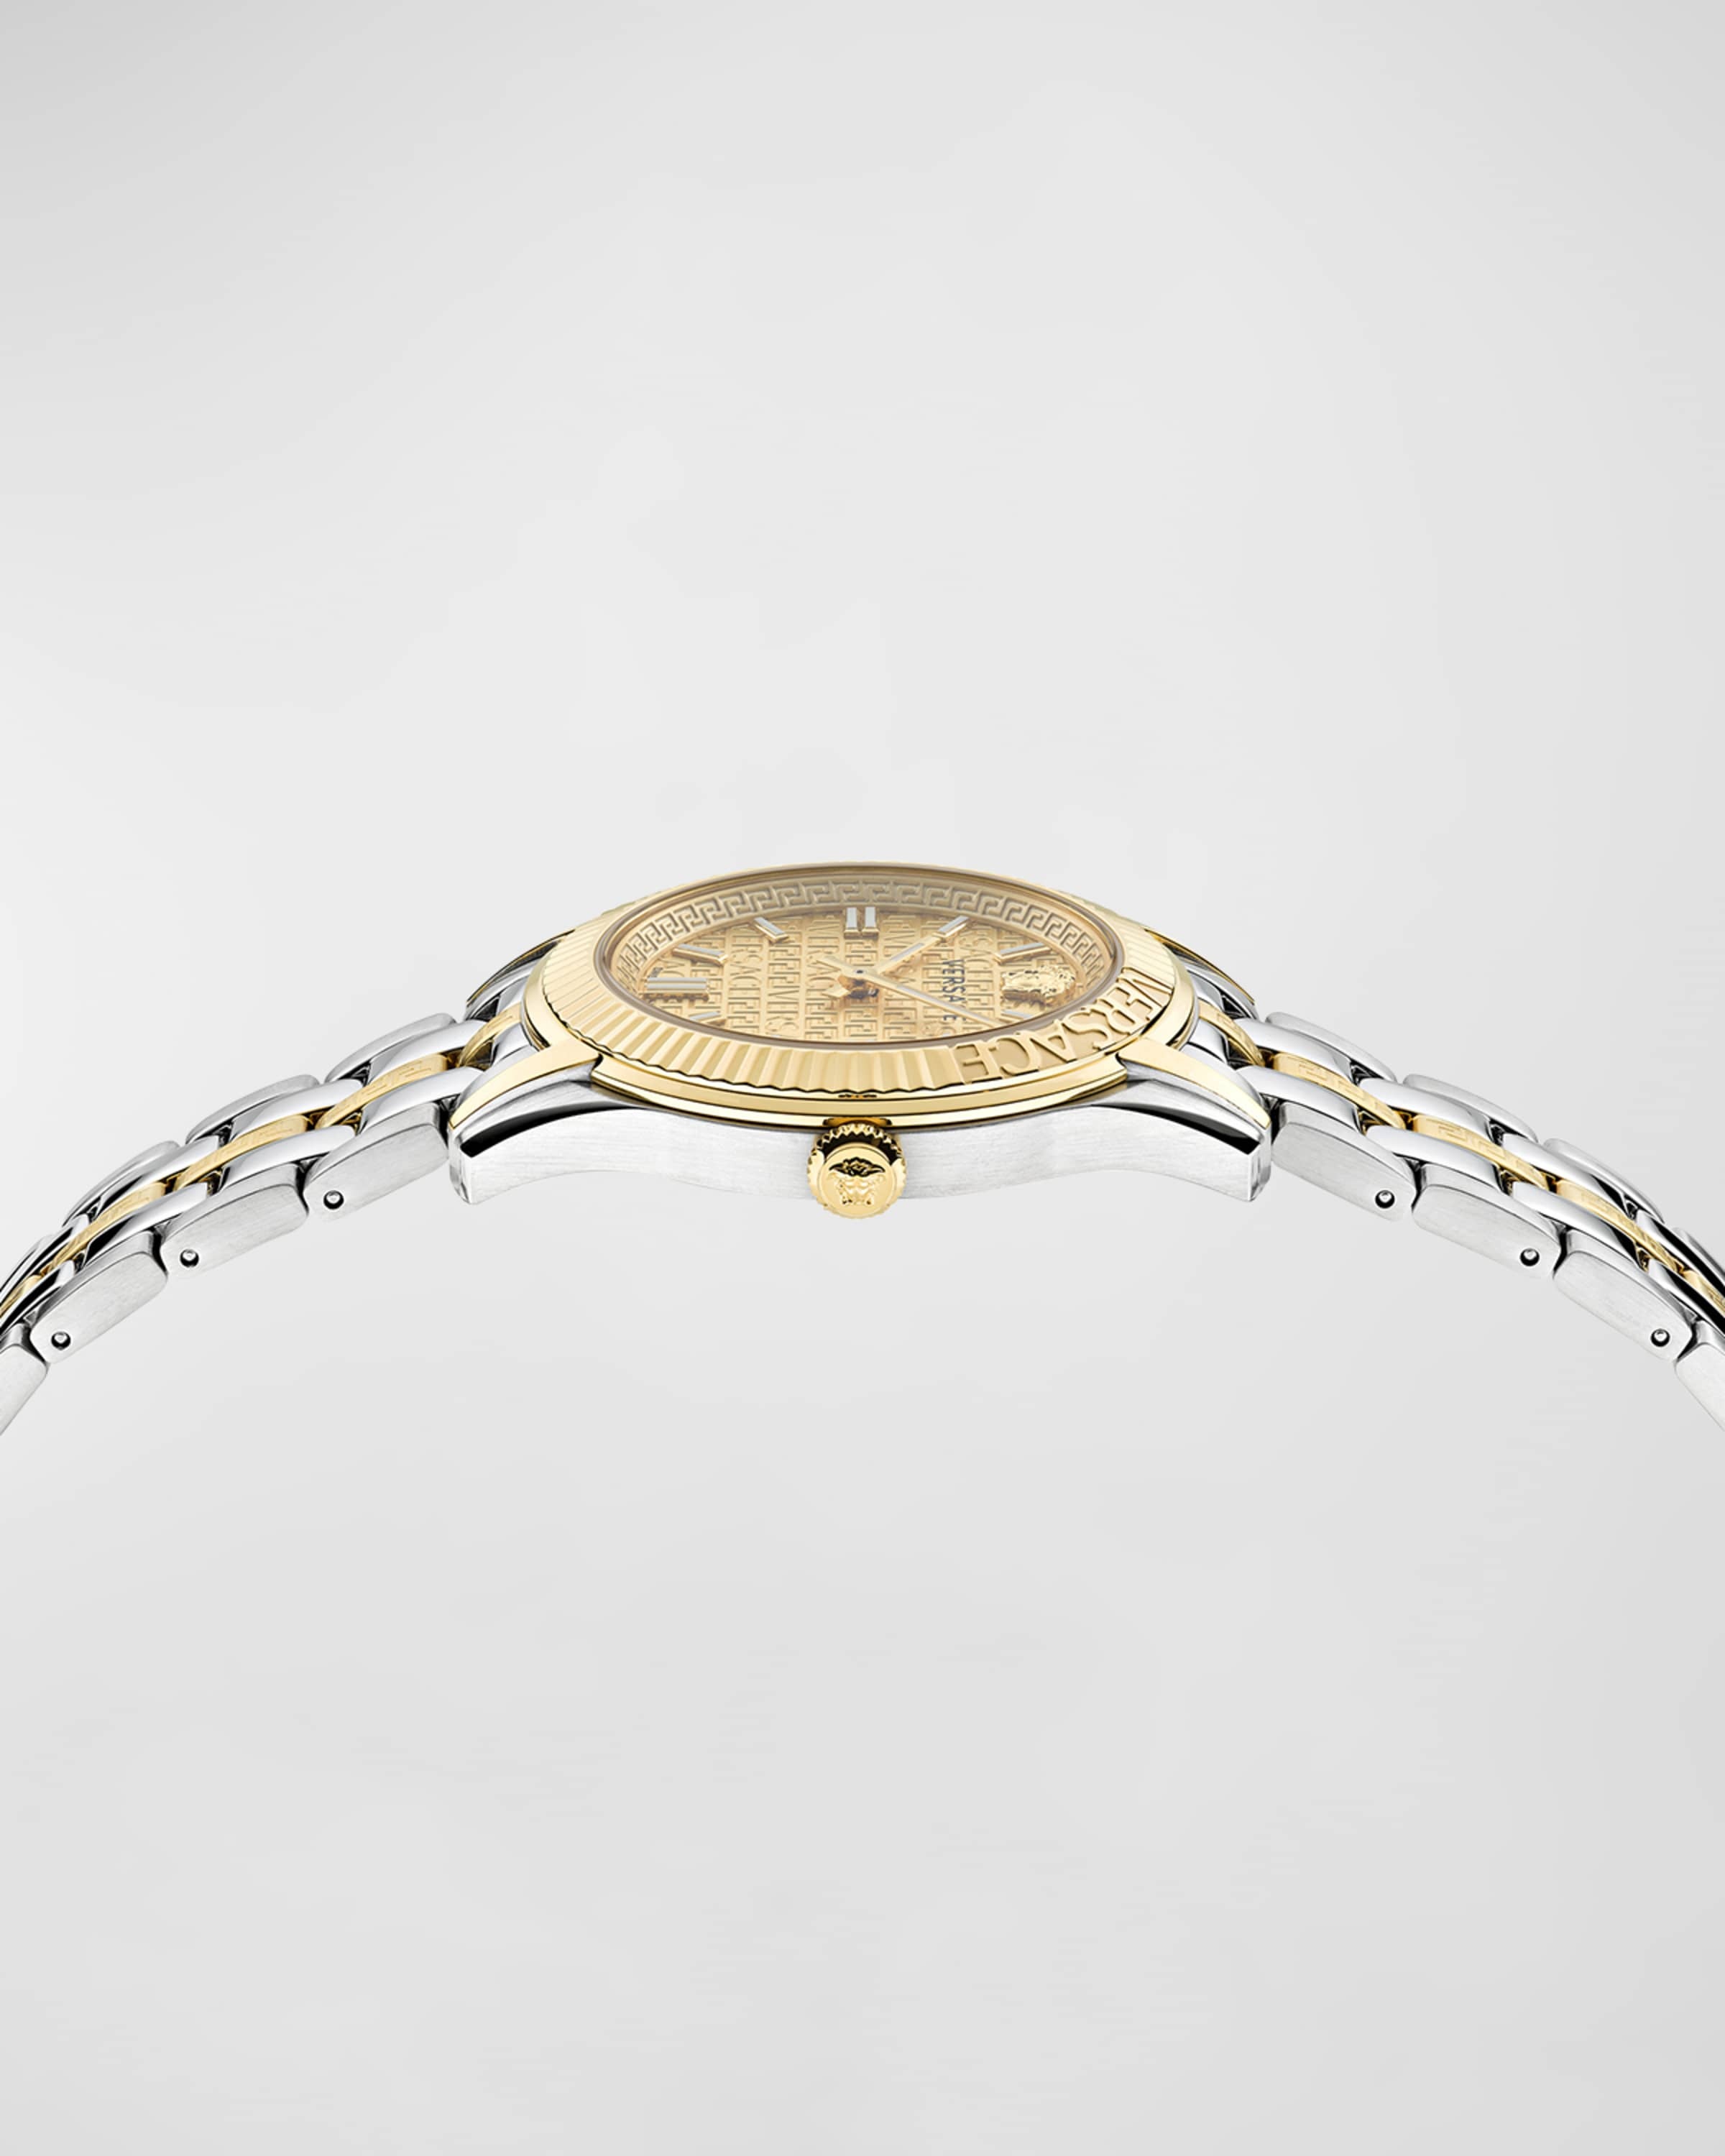 35mm Greca Time Watch with Bracelet Strap, Two-Tone - 2